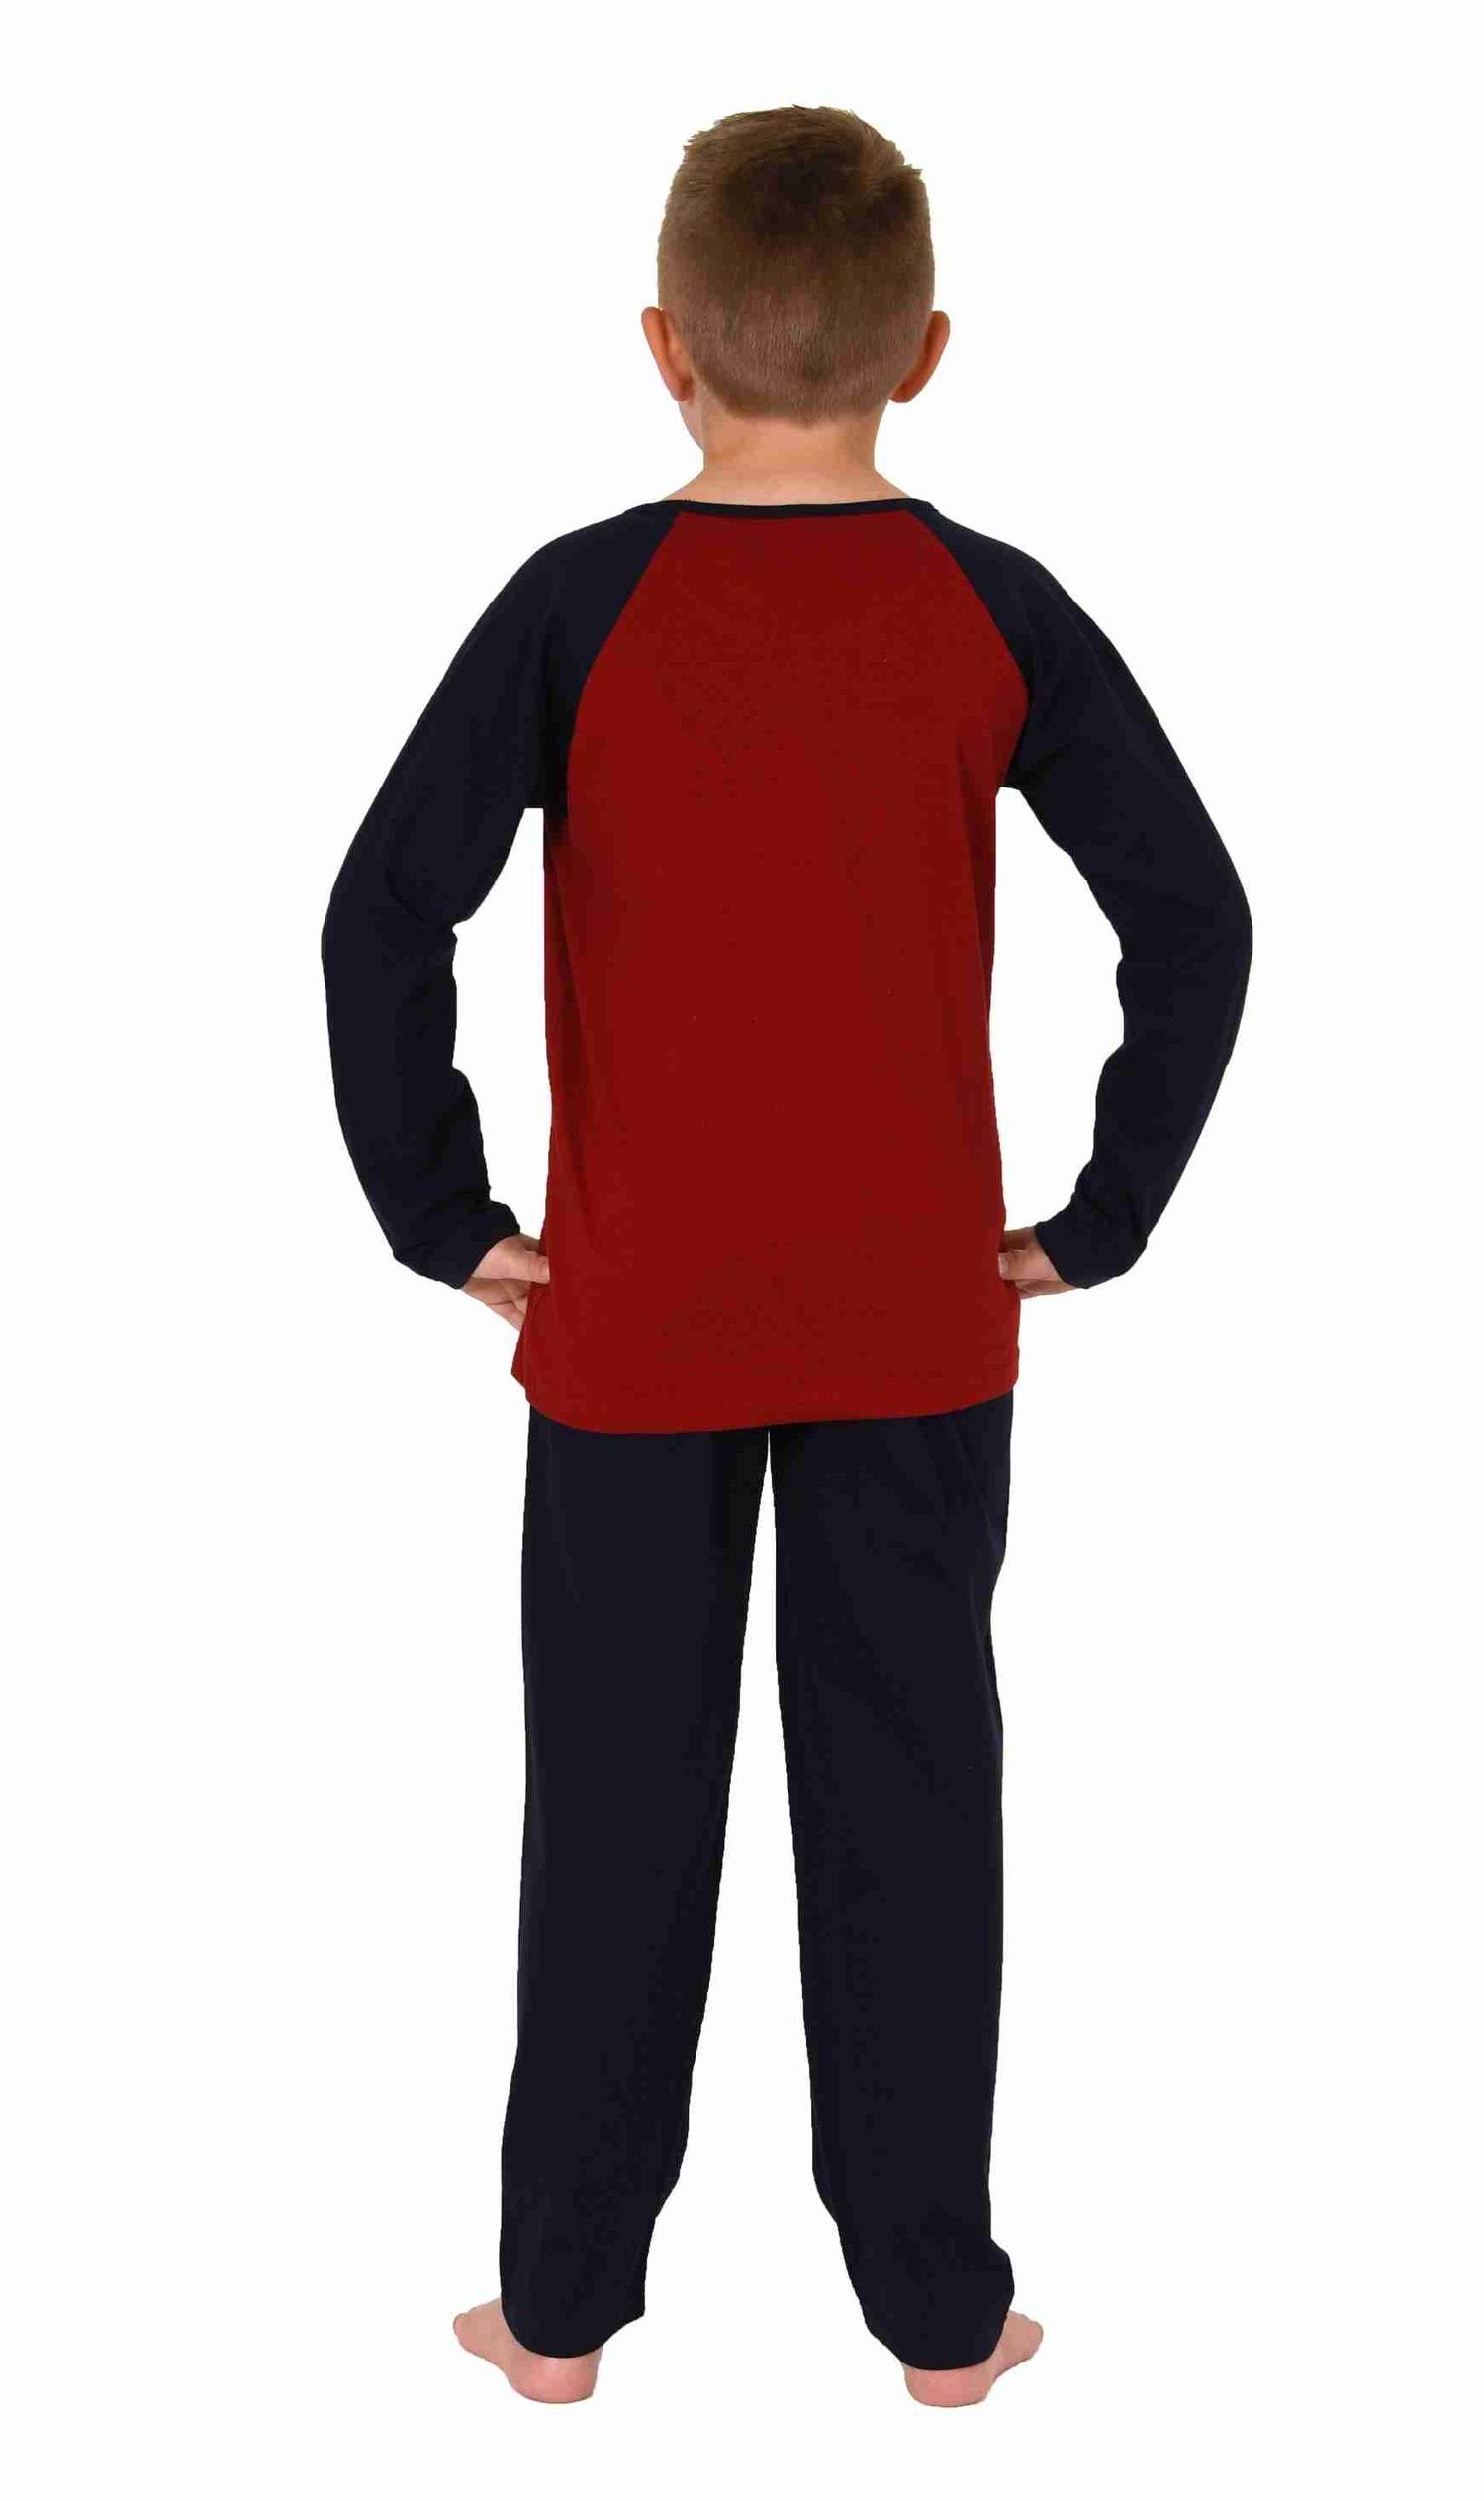 coolen Jungen Pyjama Basketball-Motiv rot Normann Schlafanzug mit langarm